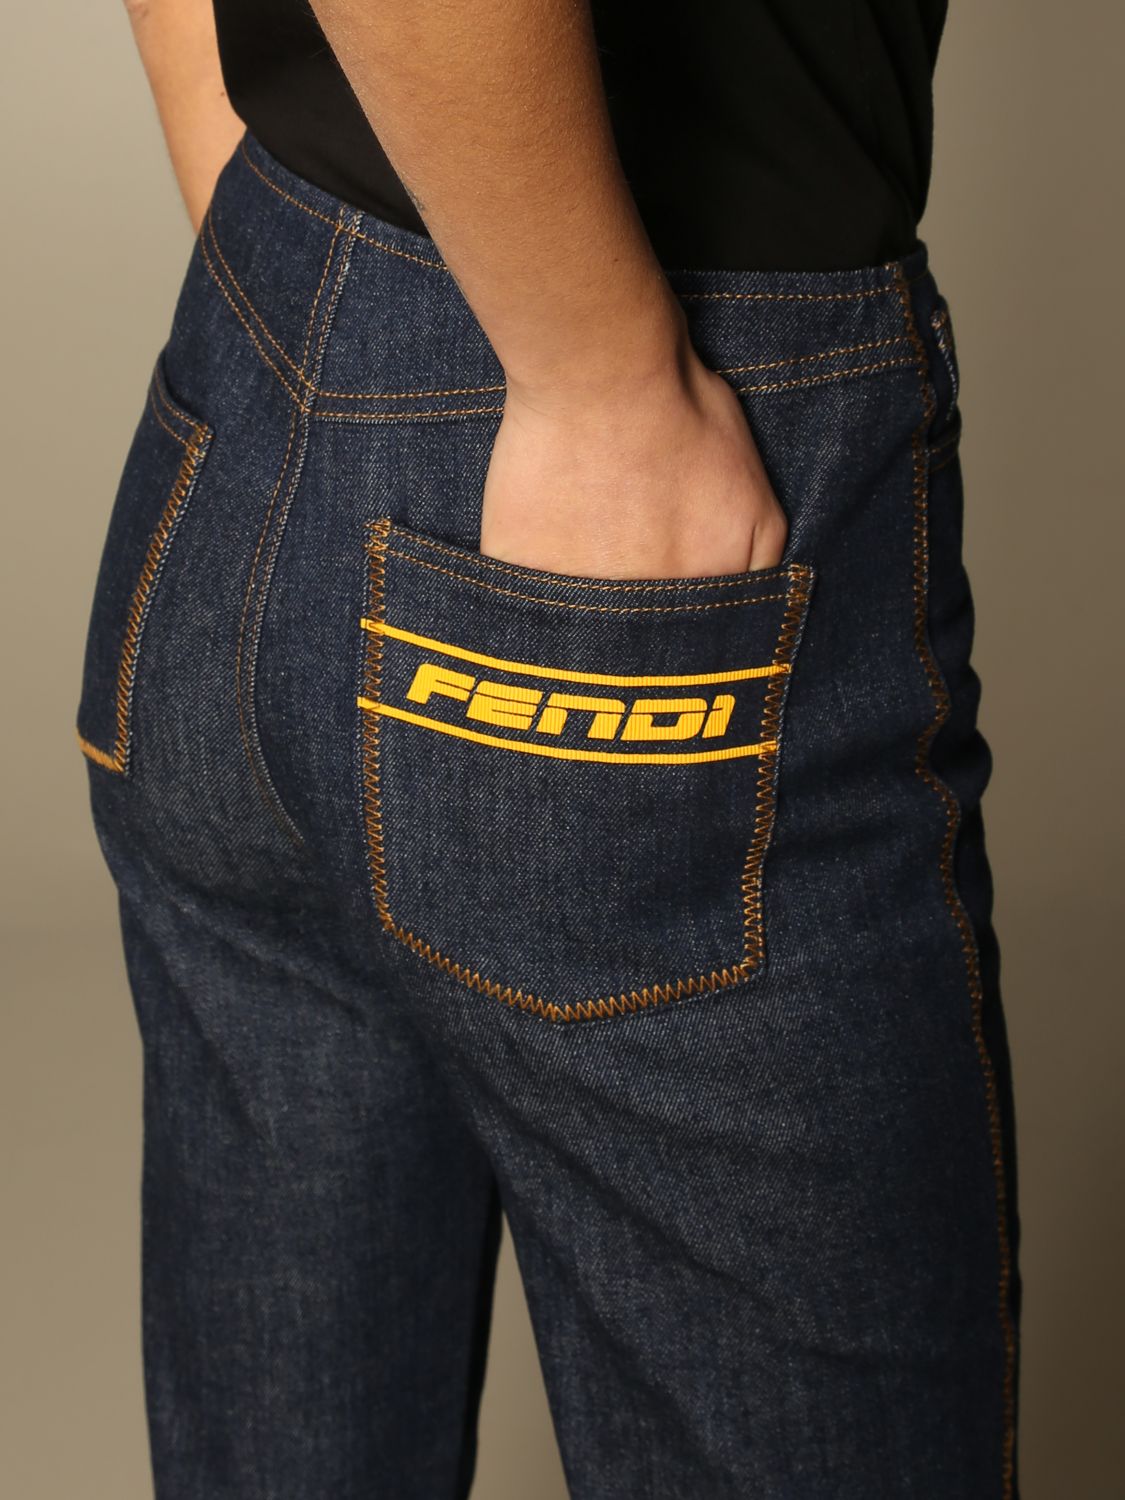 fendi logo jeans womens